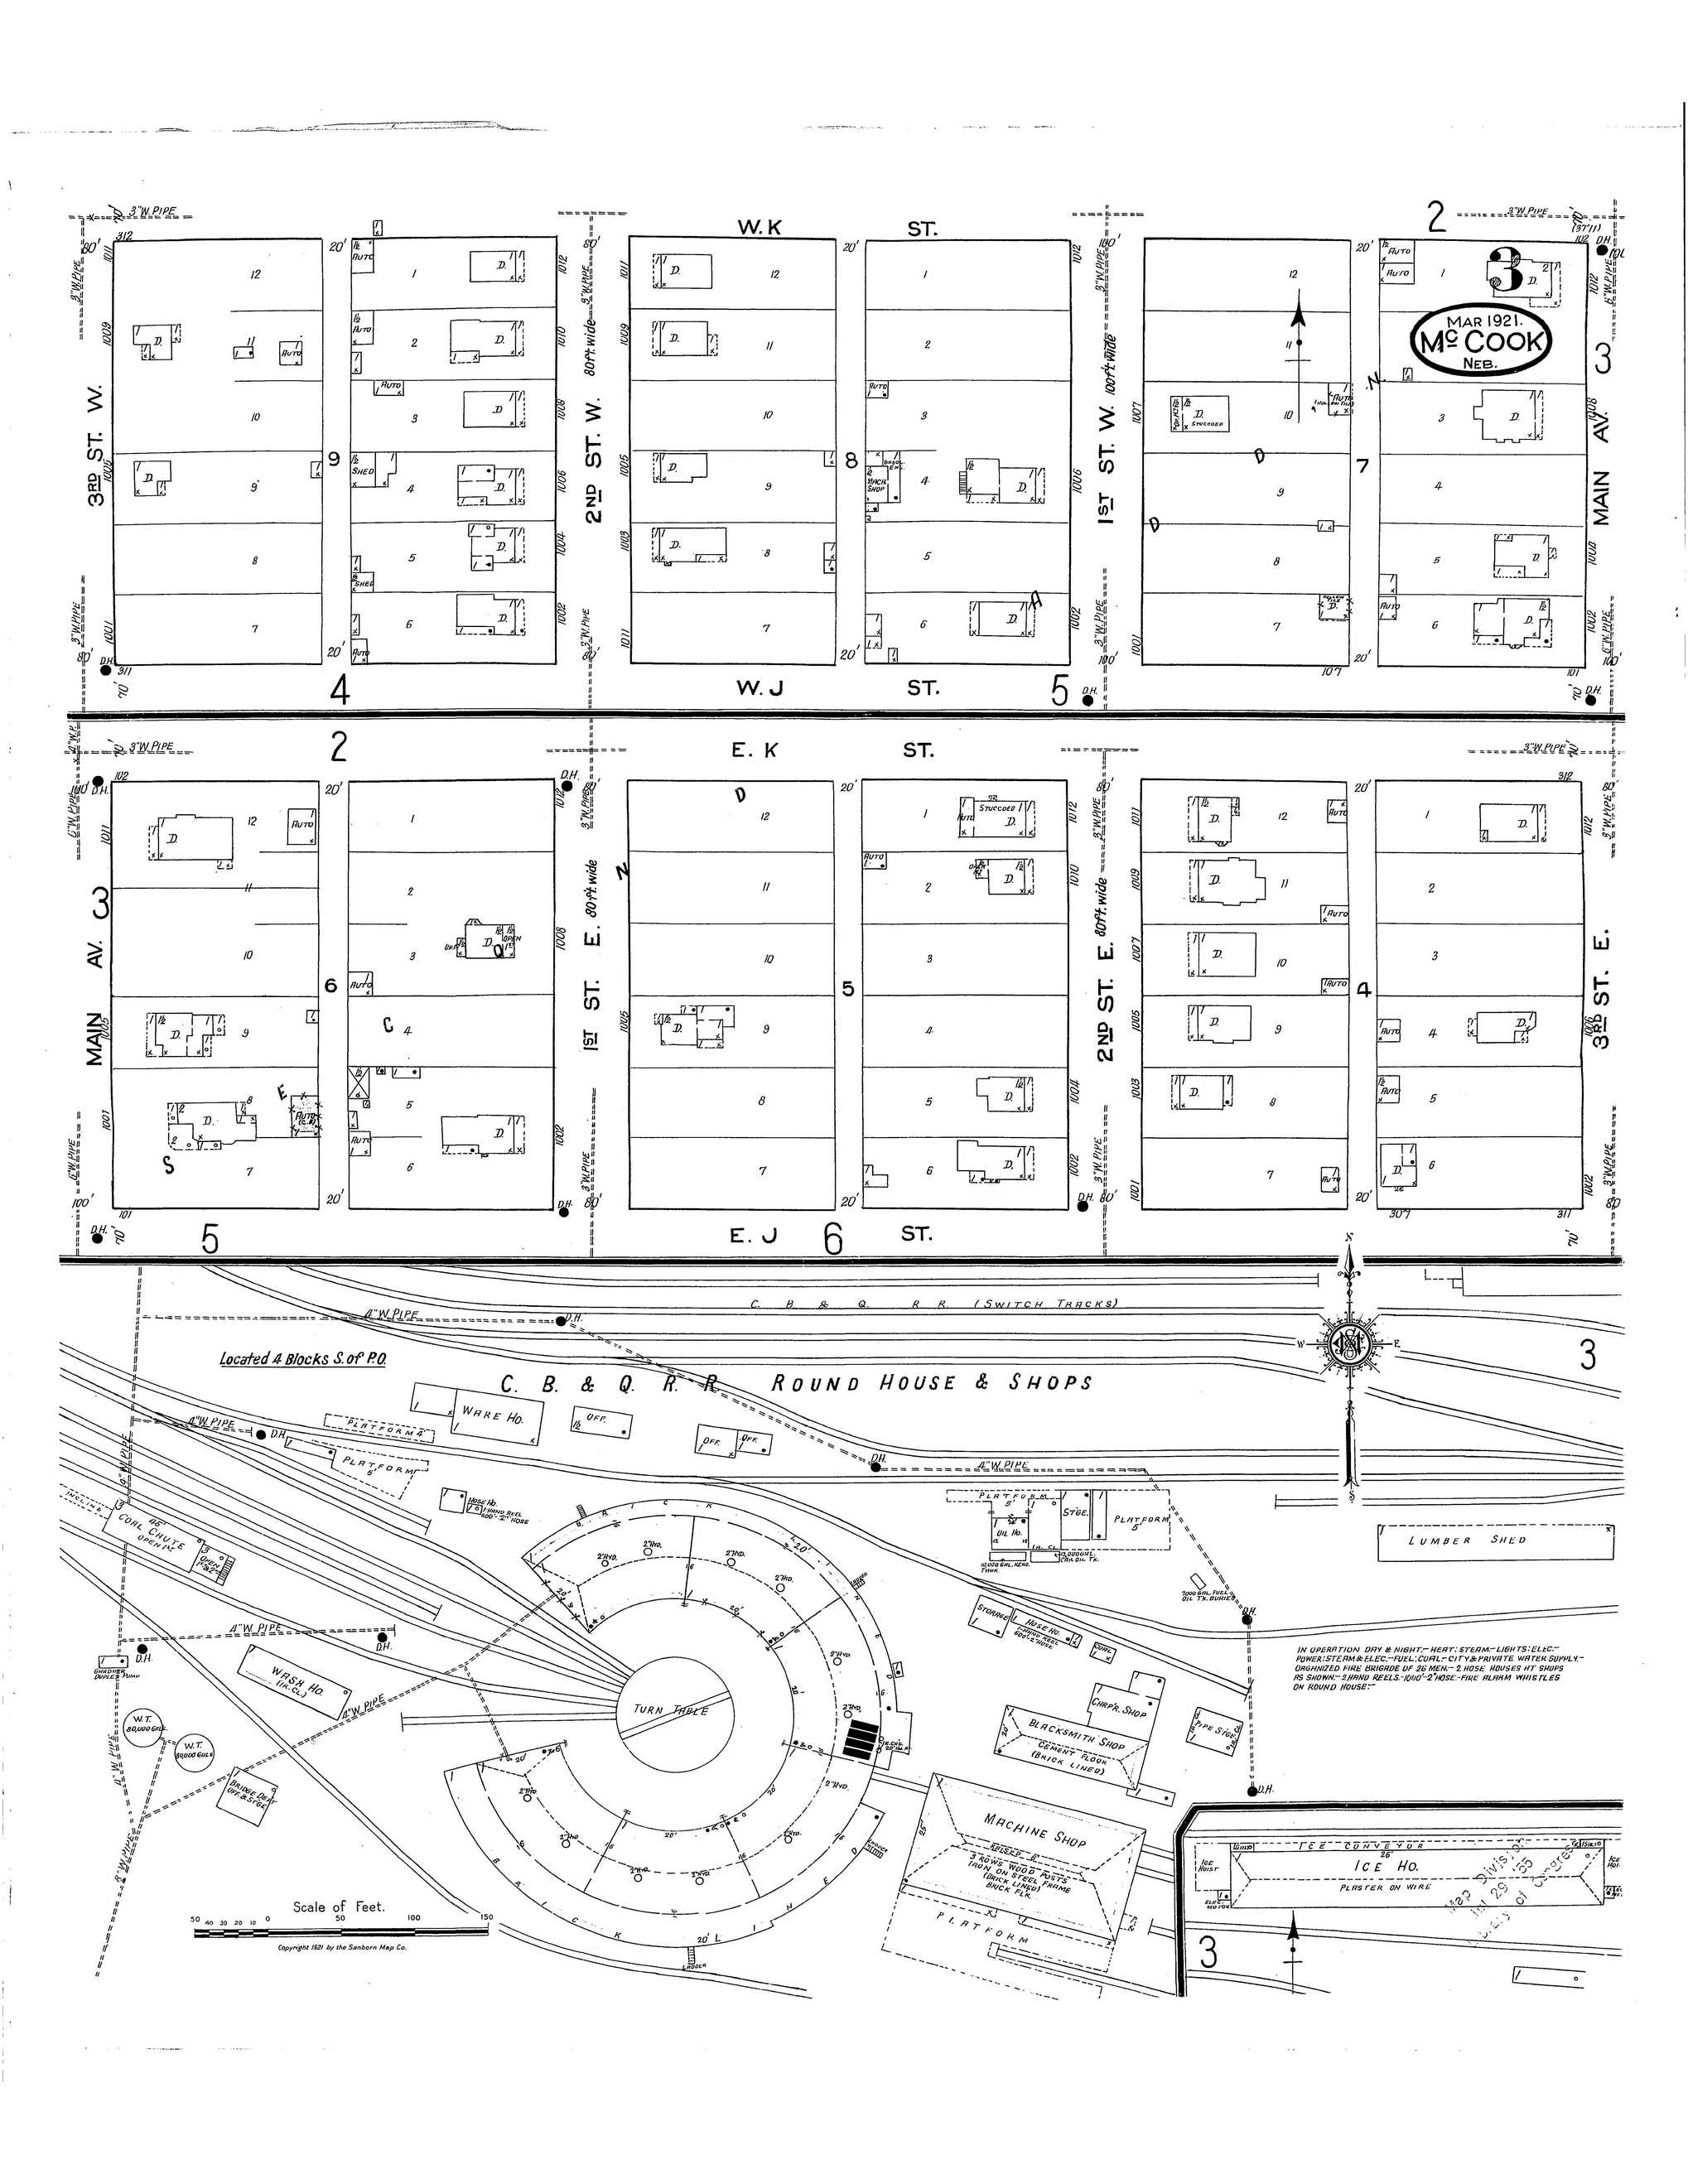 Sanborn map 1921 page 3